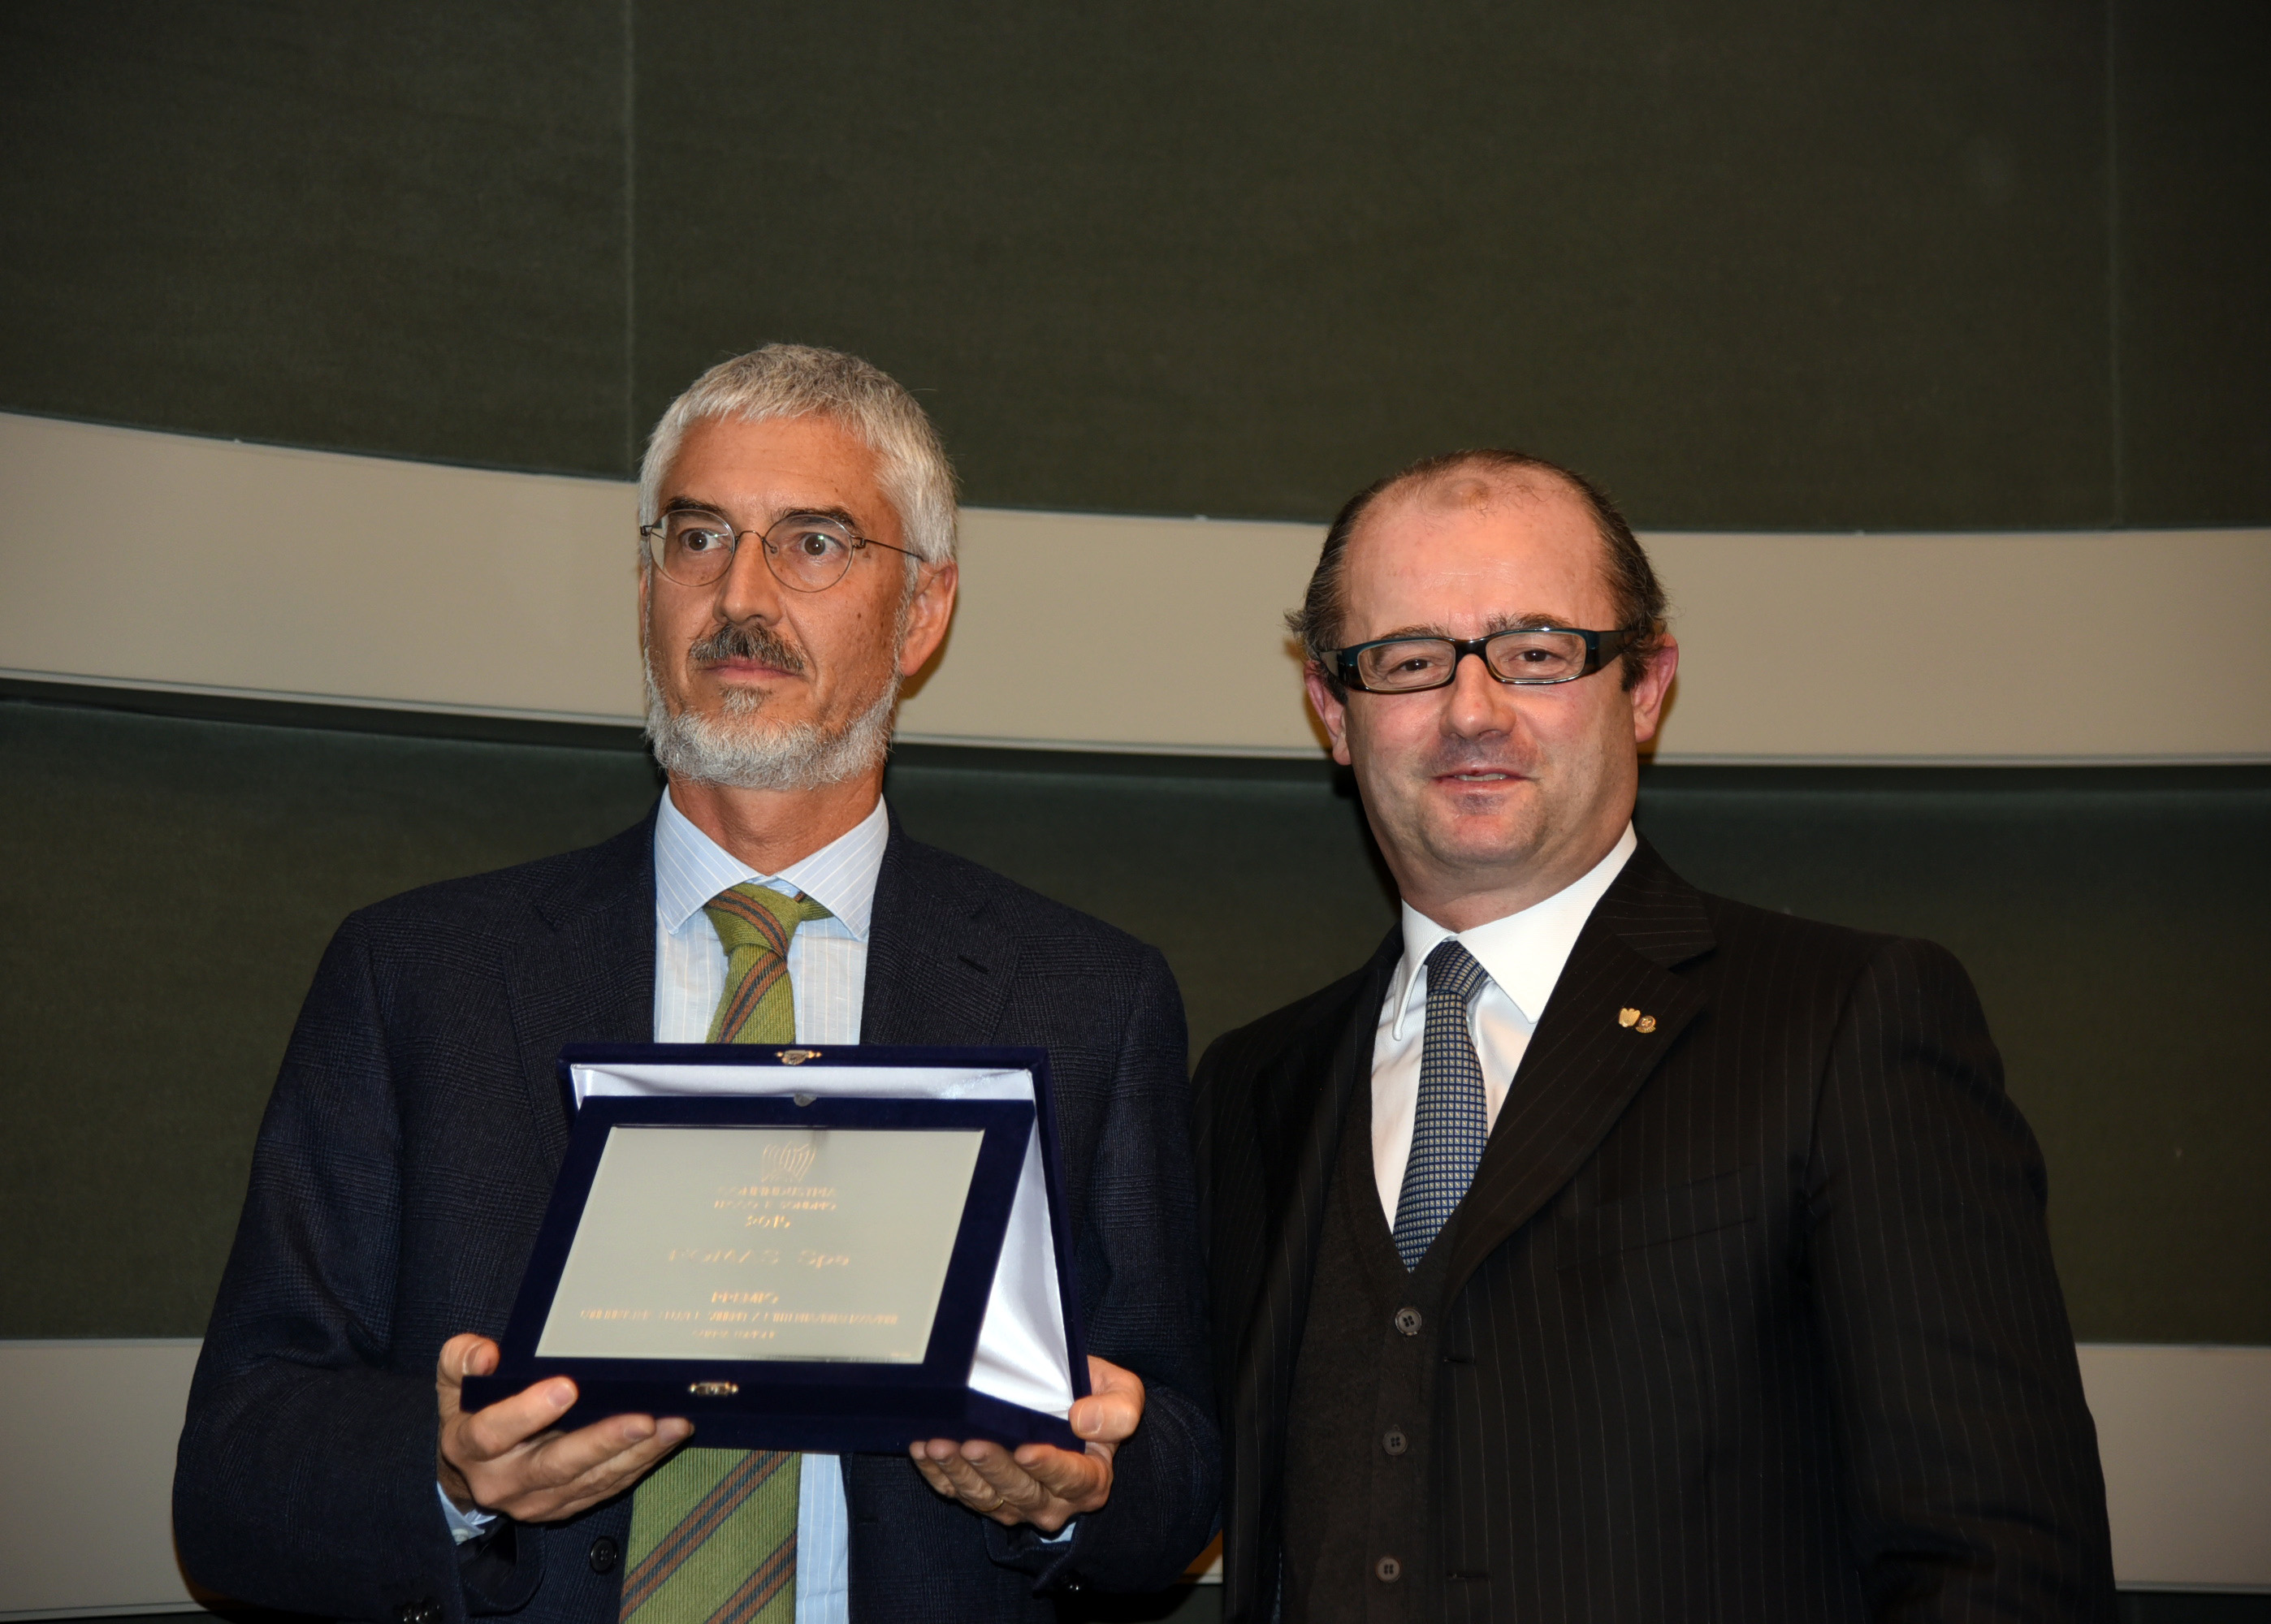 FOMAS awarded from Confindustria Lecco e Sondrio for its Internationalization